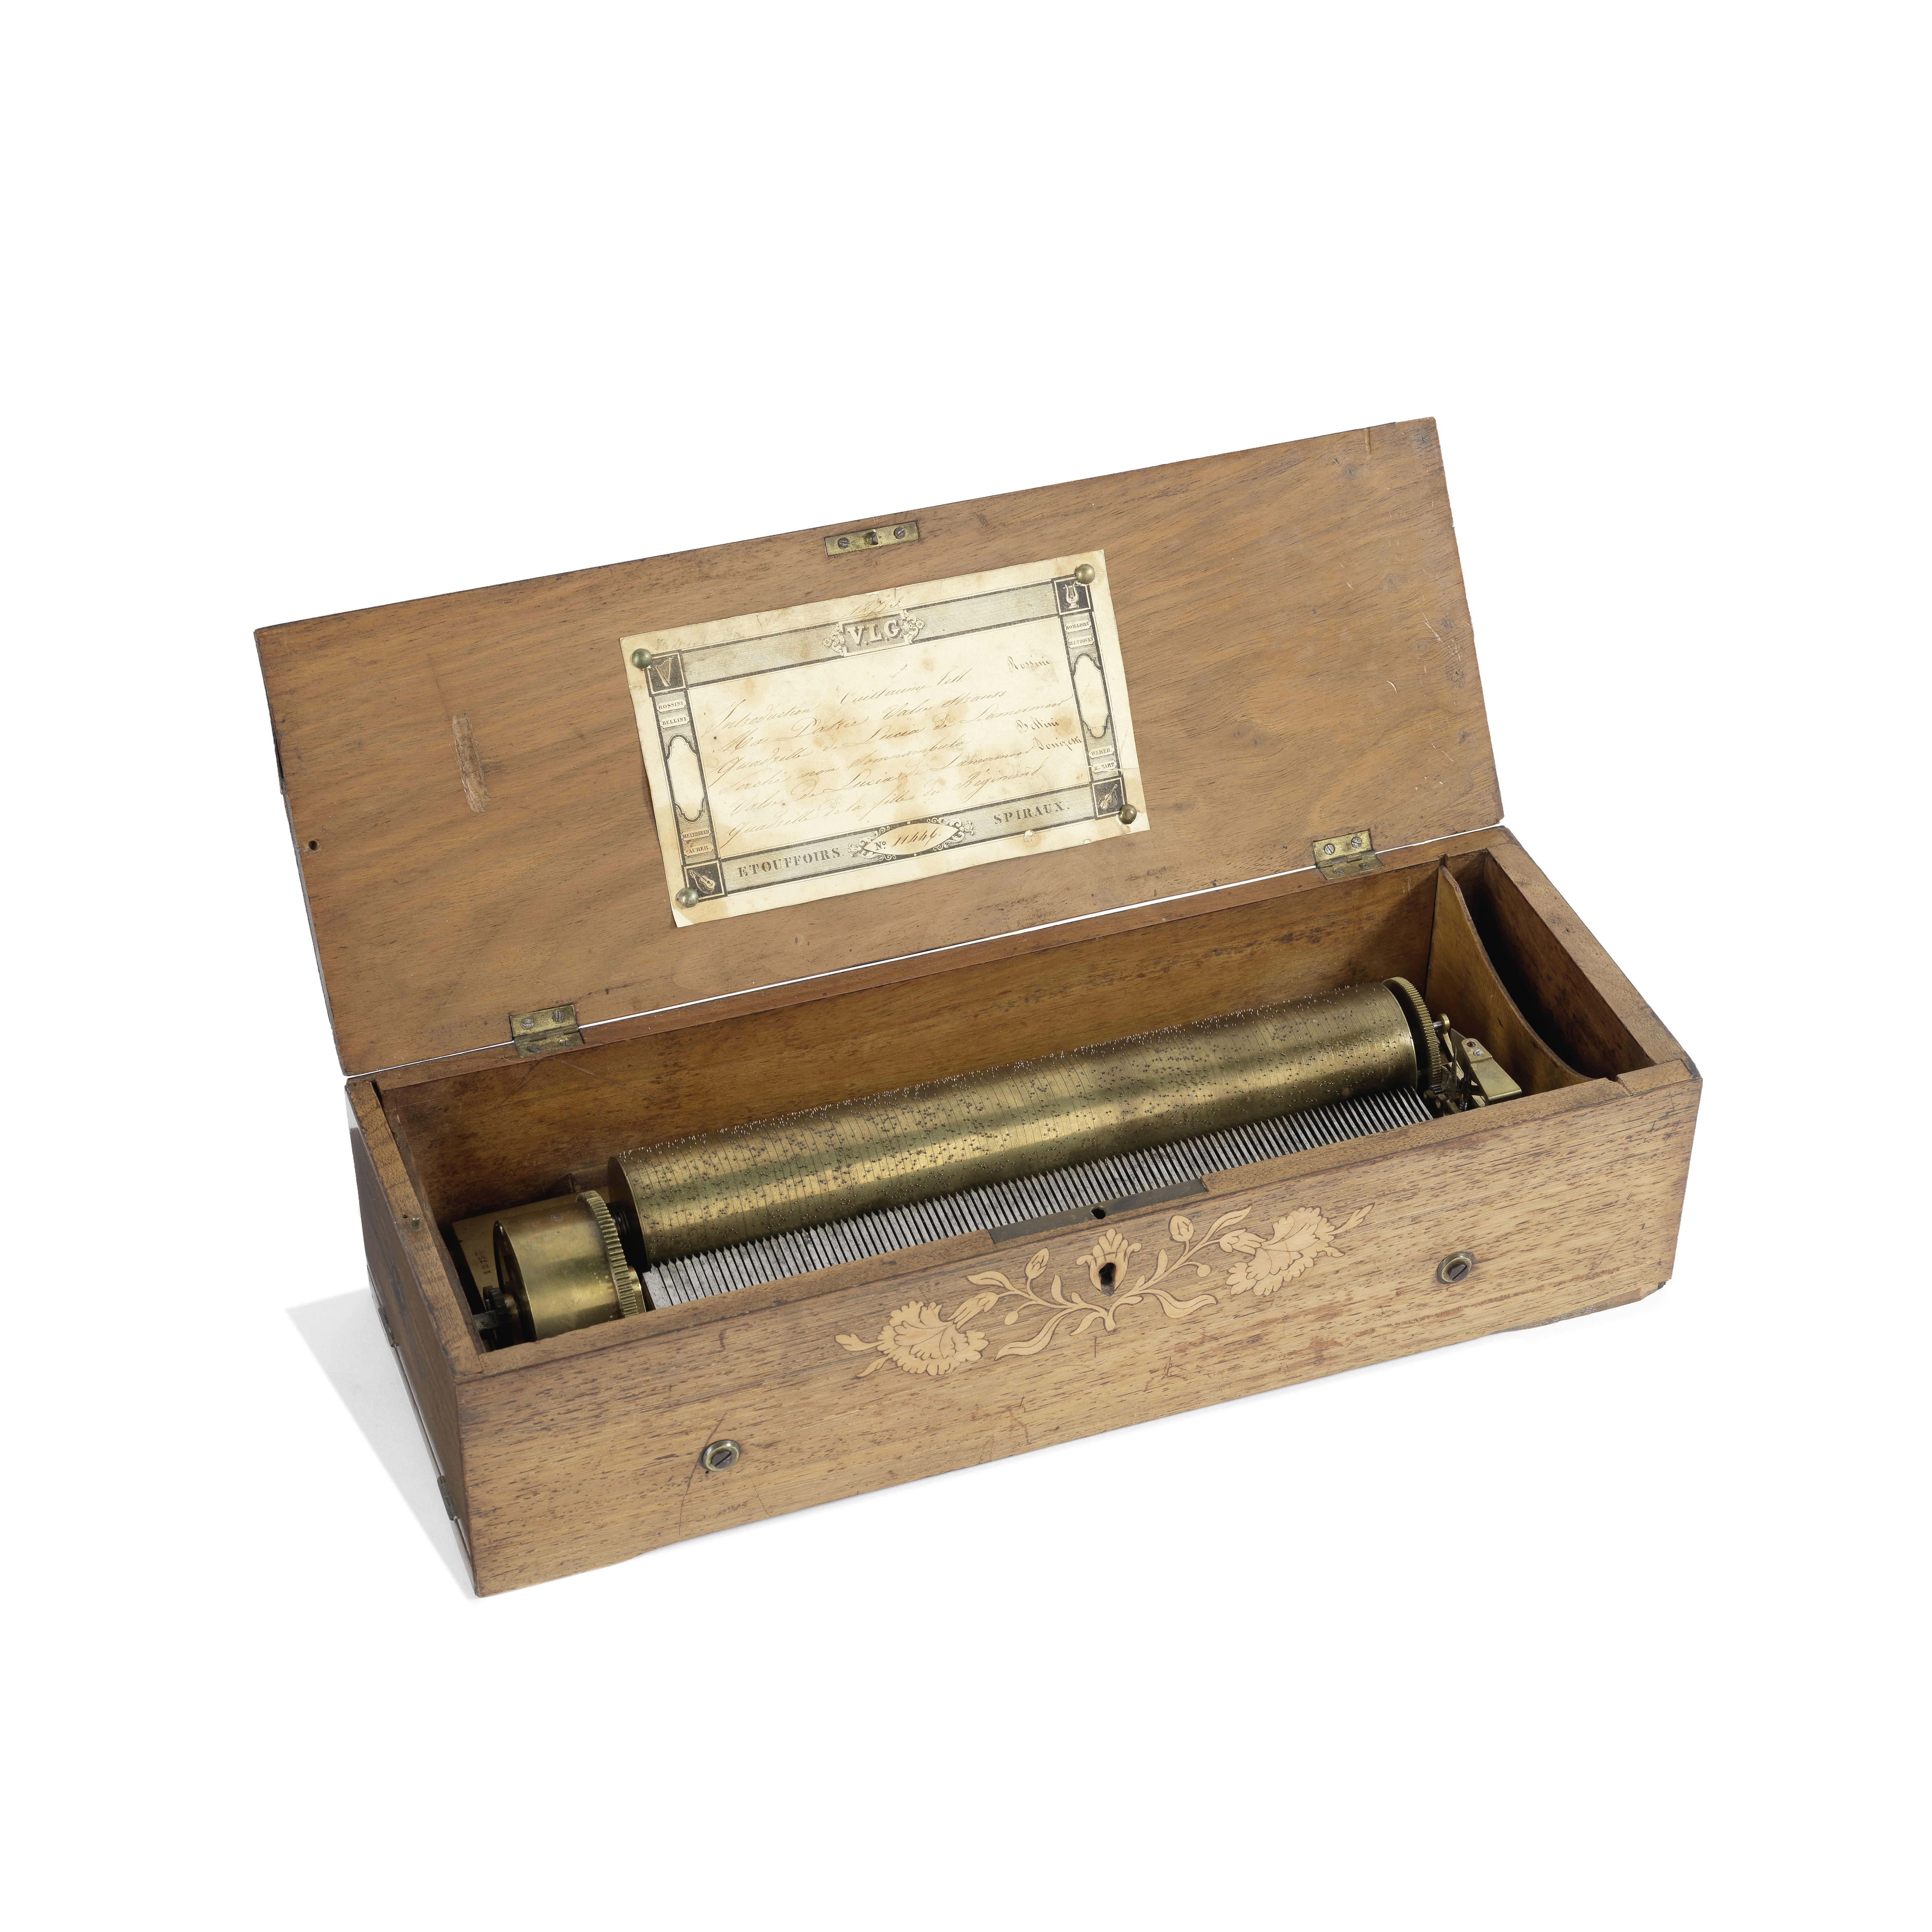 A Keywind cylinder Musical Box, Swiss, mid 19th century,